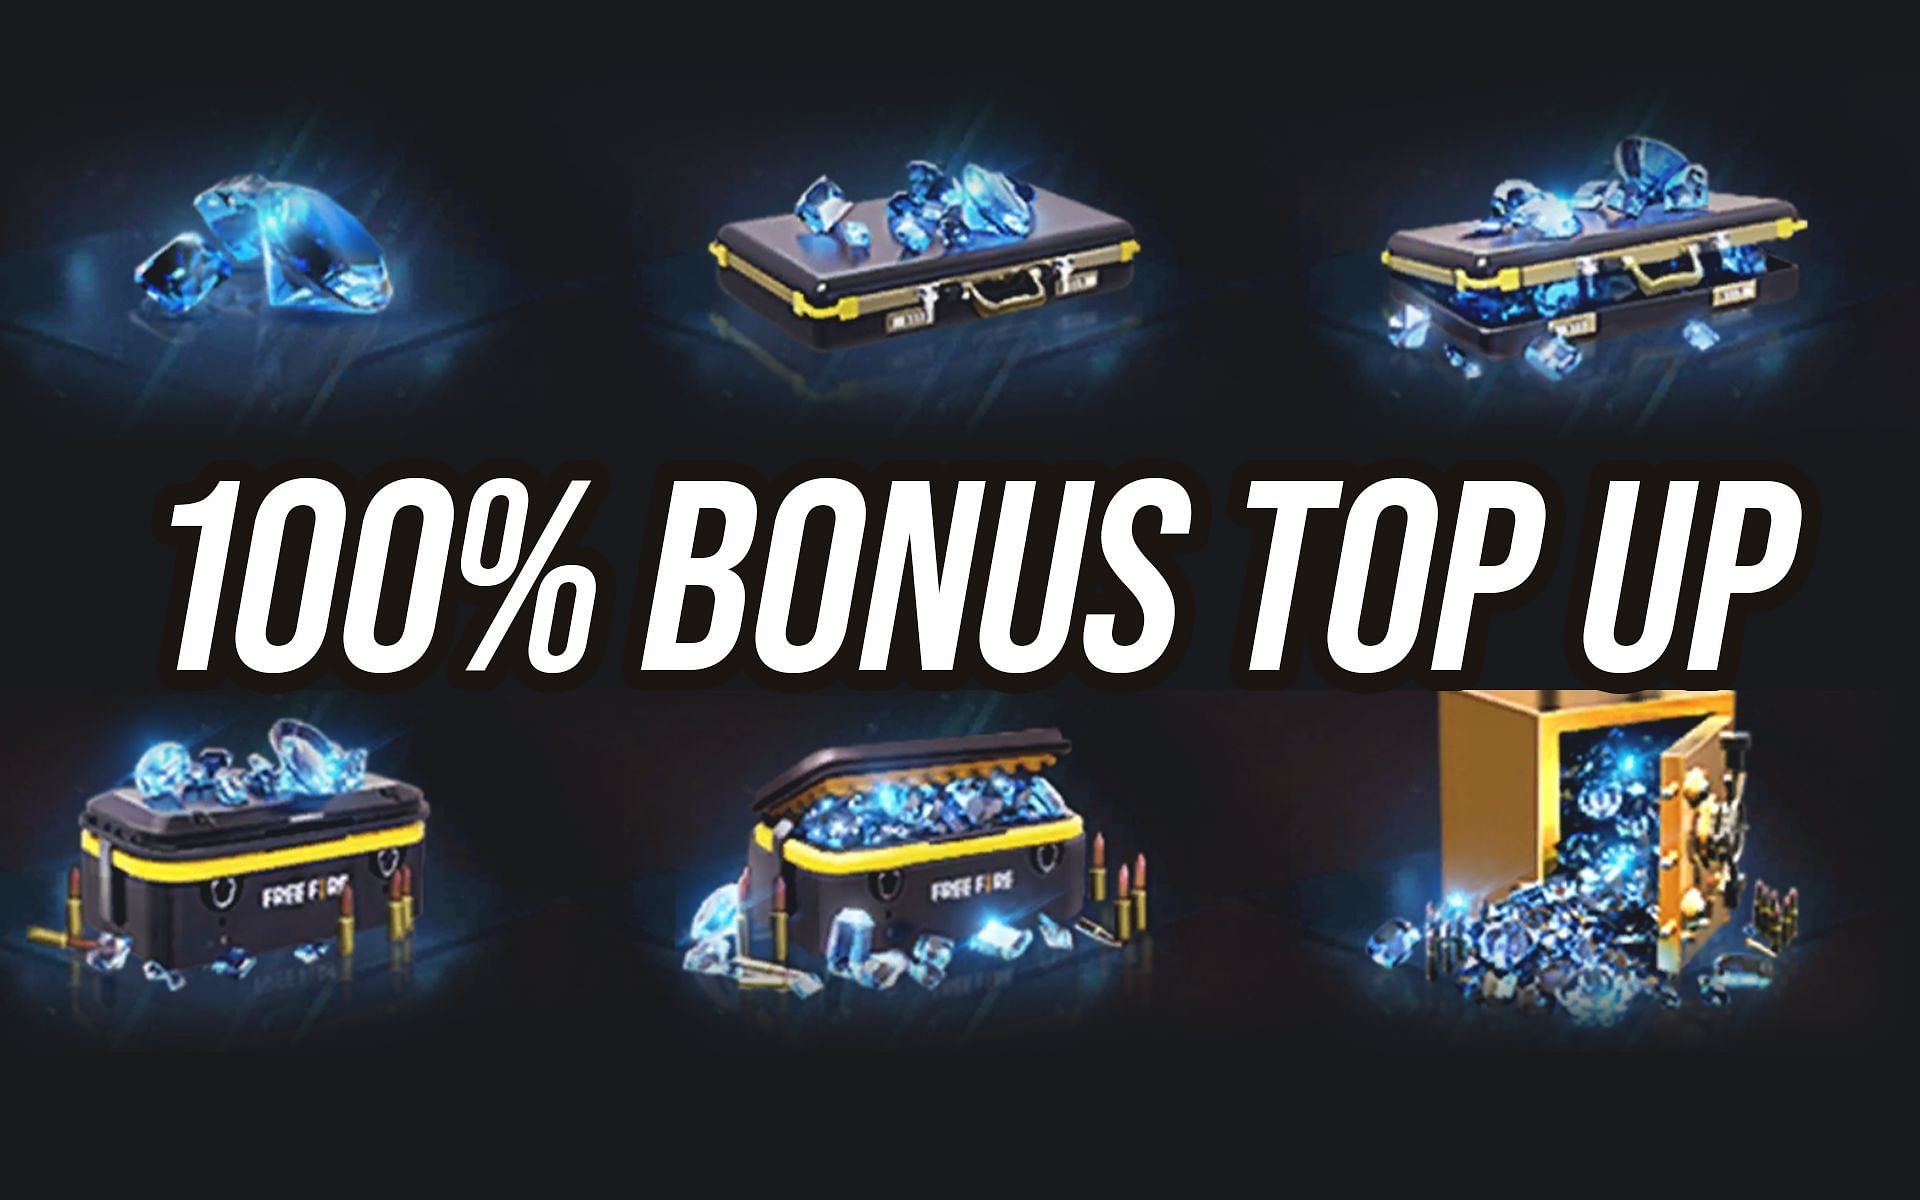 100% bonus top-up provides double the diamonds (Image via Sportskeeda)